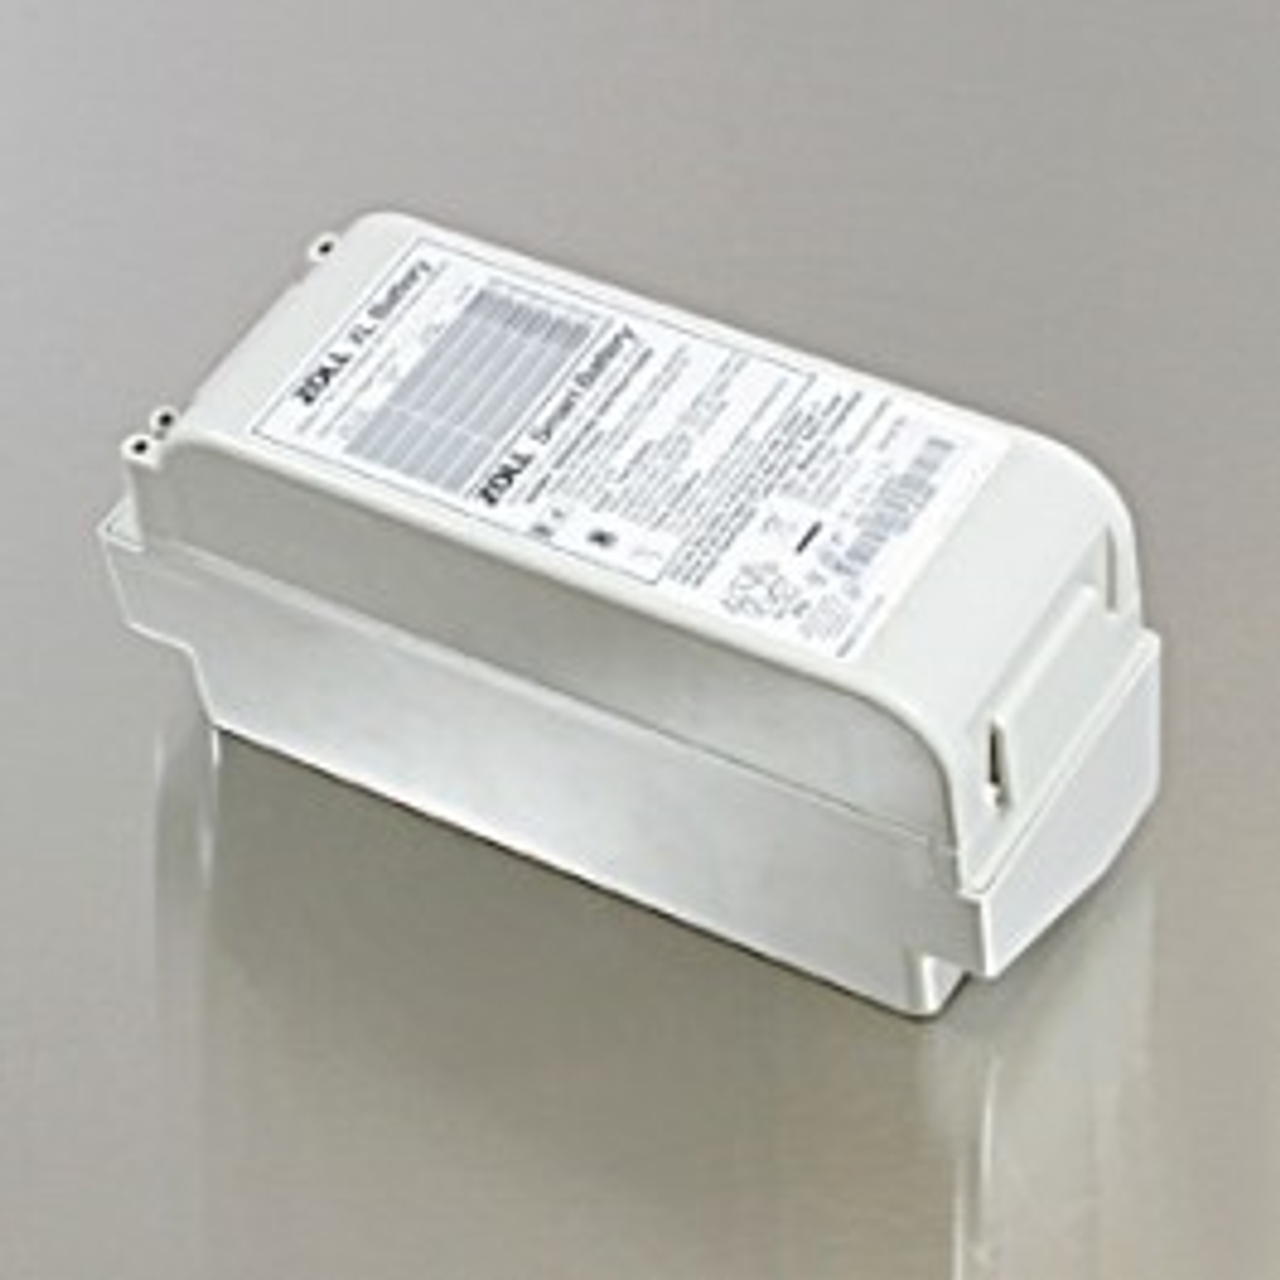 Zoll 8000-0500-01 XL Smart Ready Monitor - Defibrillator Battery